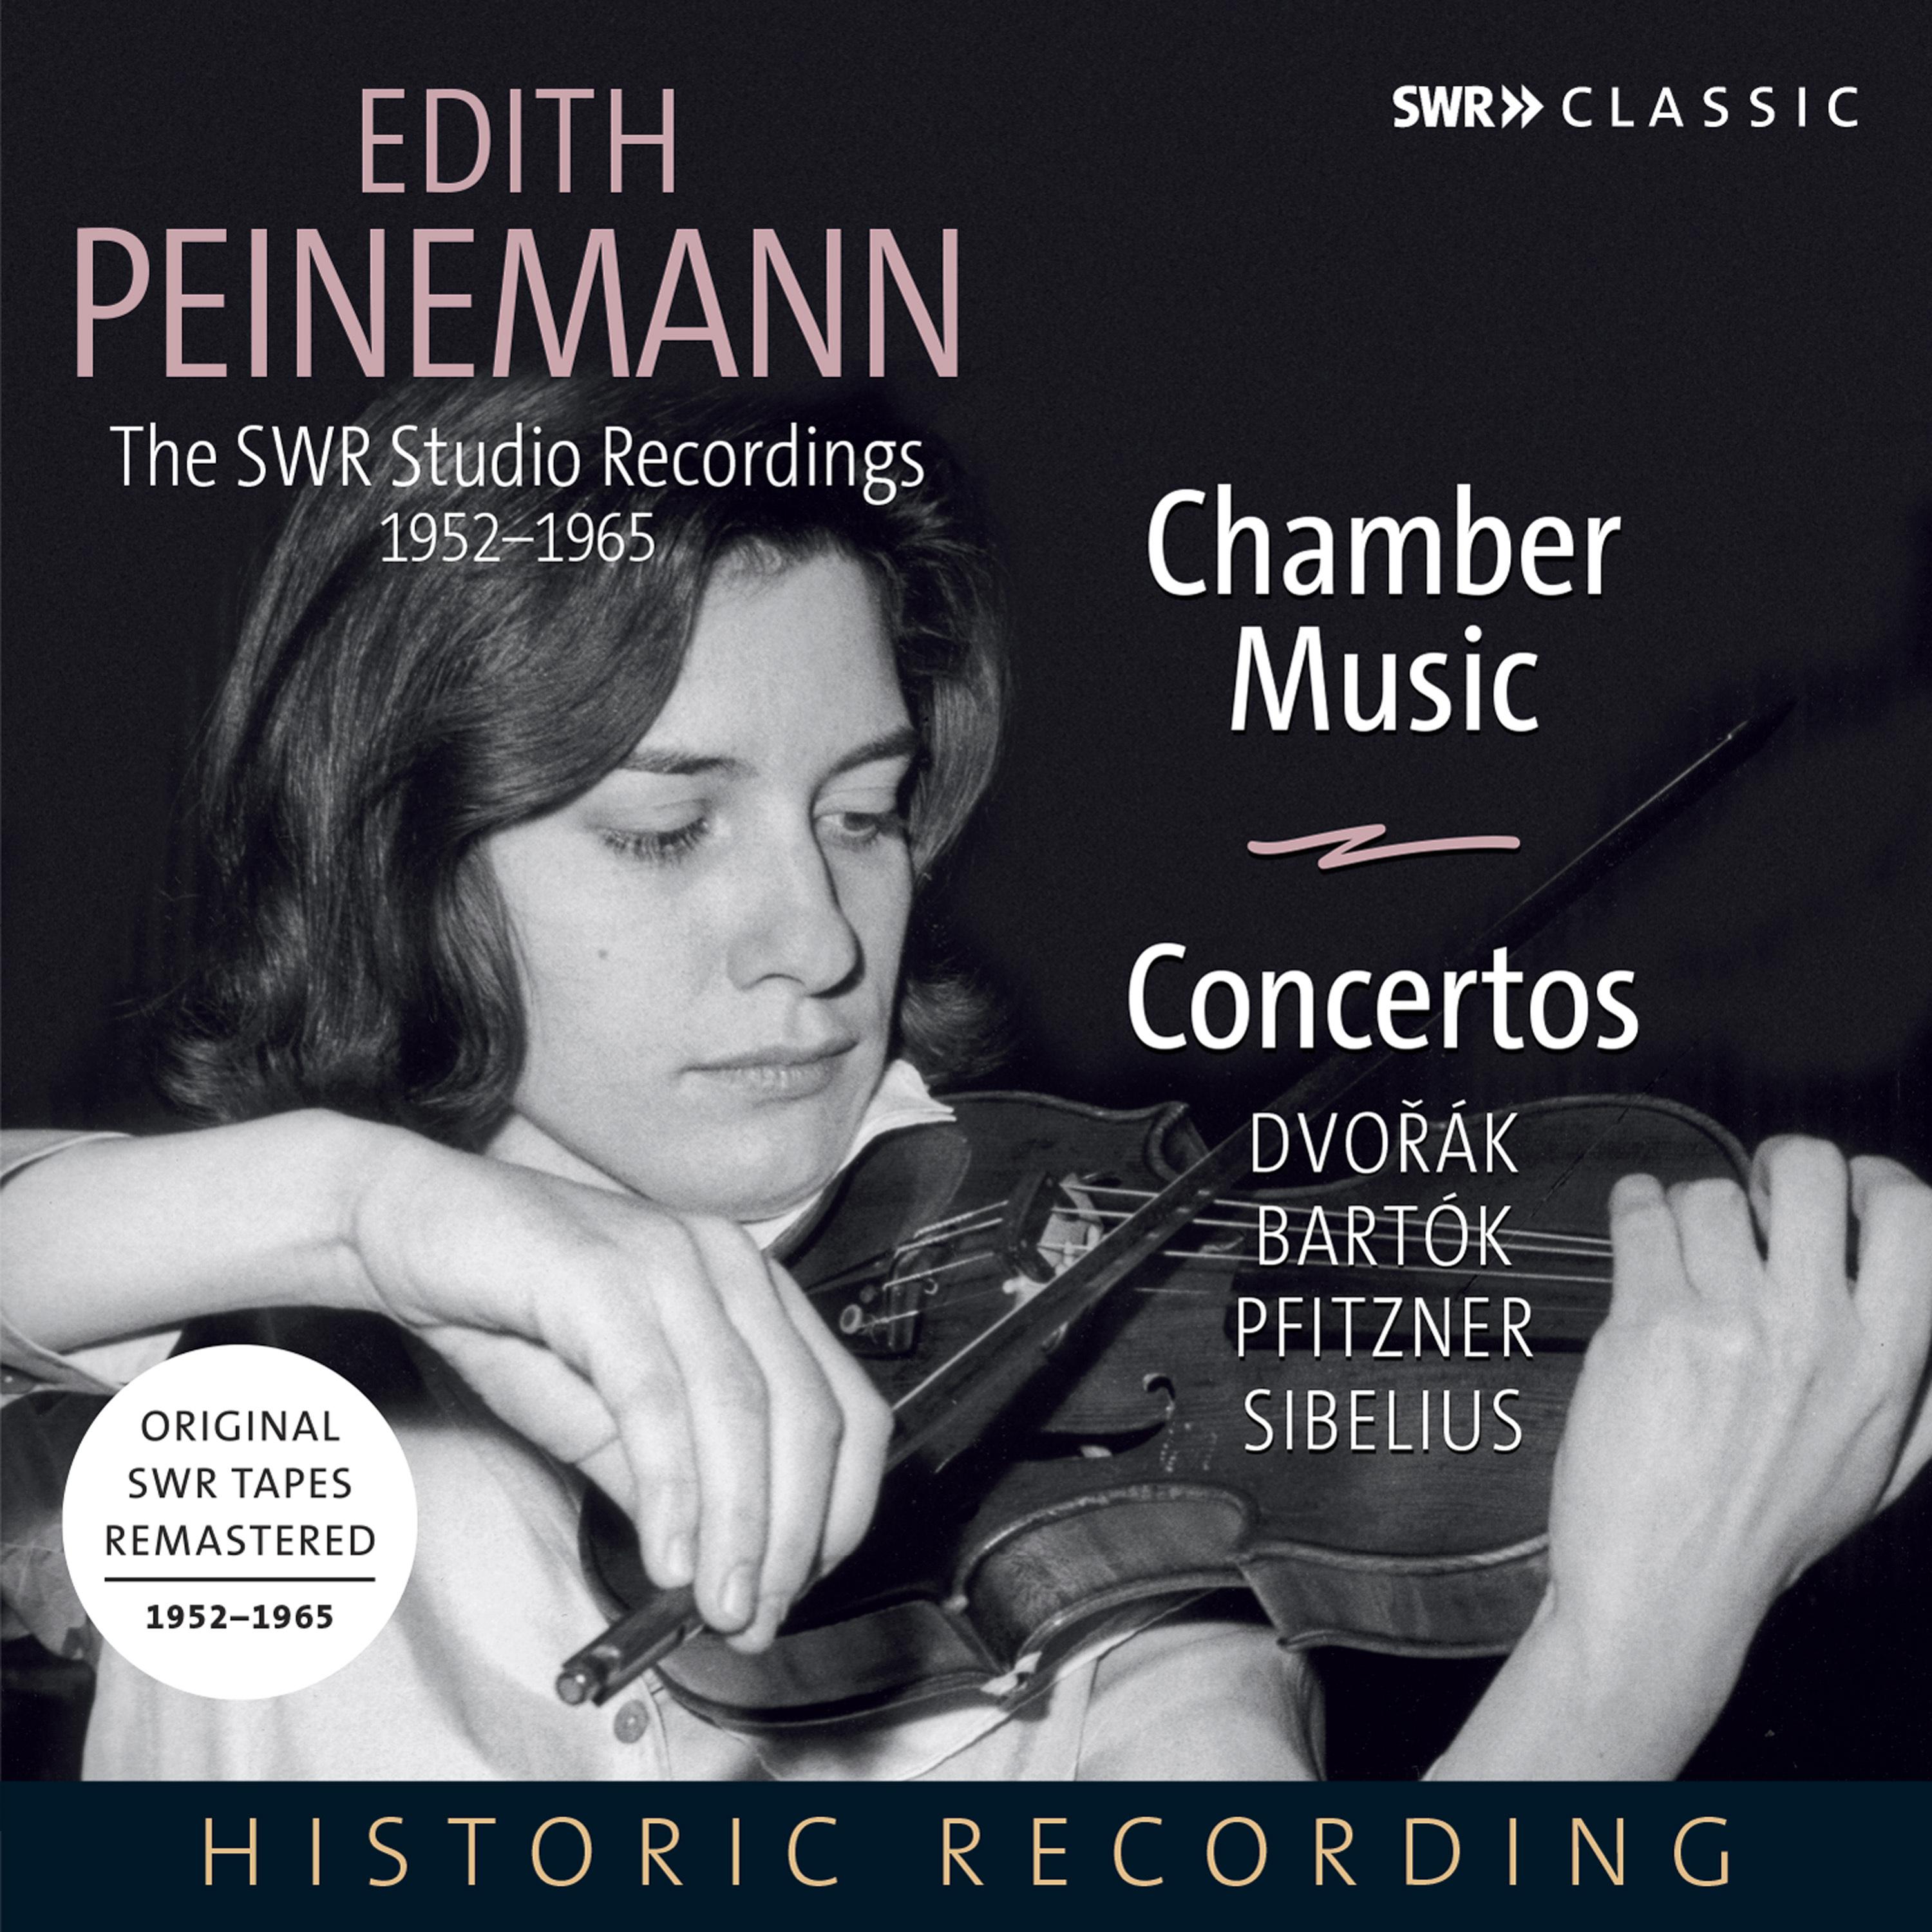 Edith Peinemann - Violin Sonata No. 1 in A Minor, Op. 105:II. Allegretto